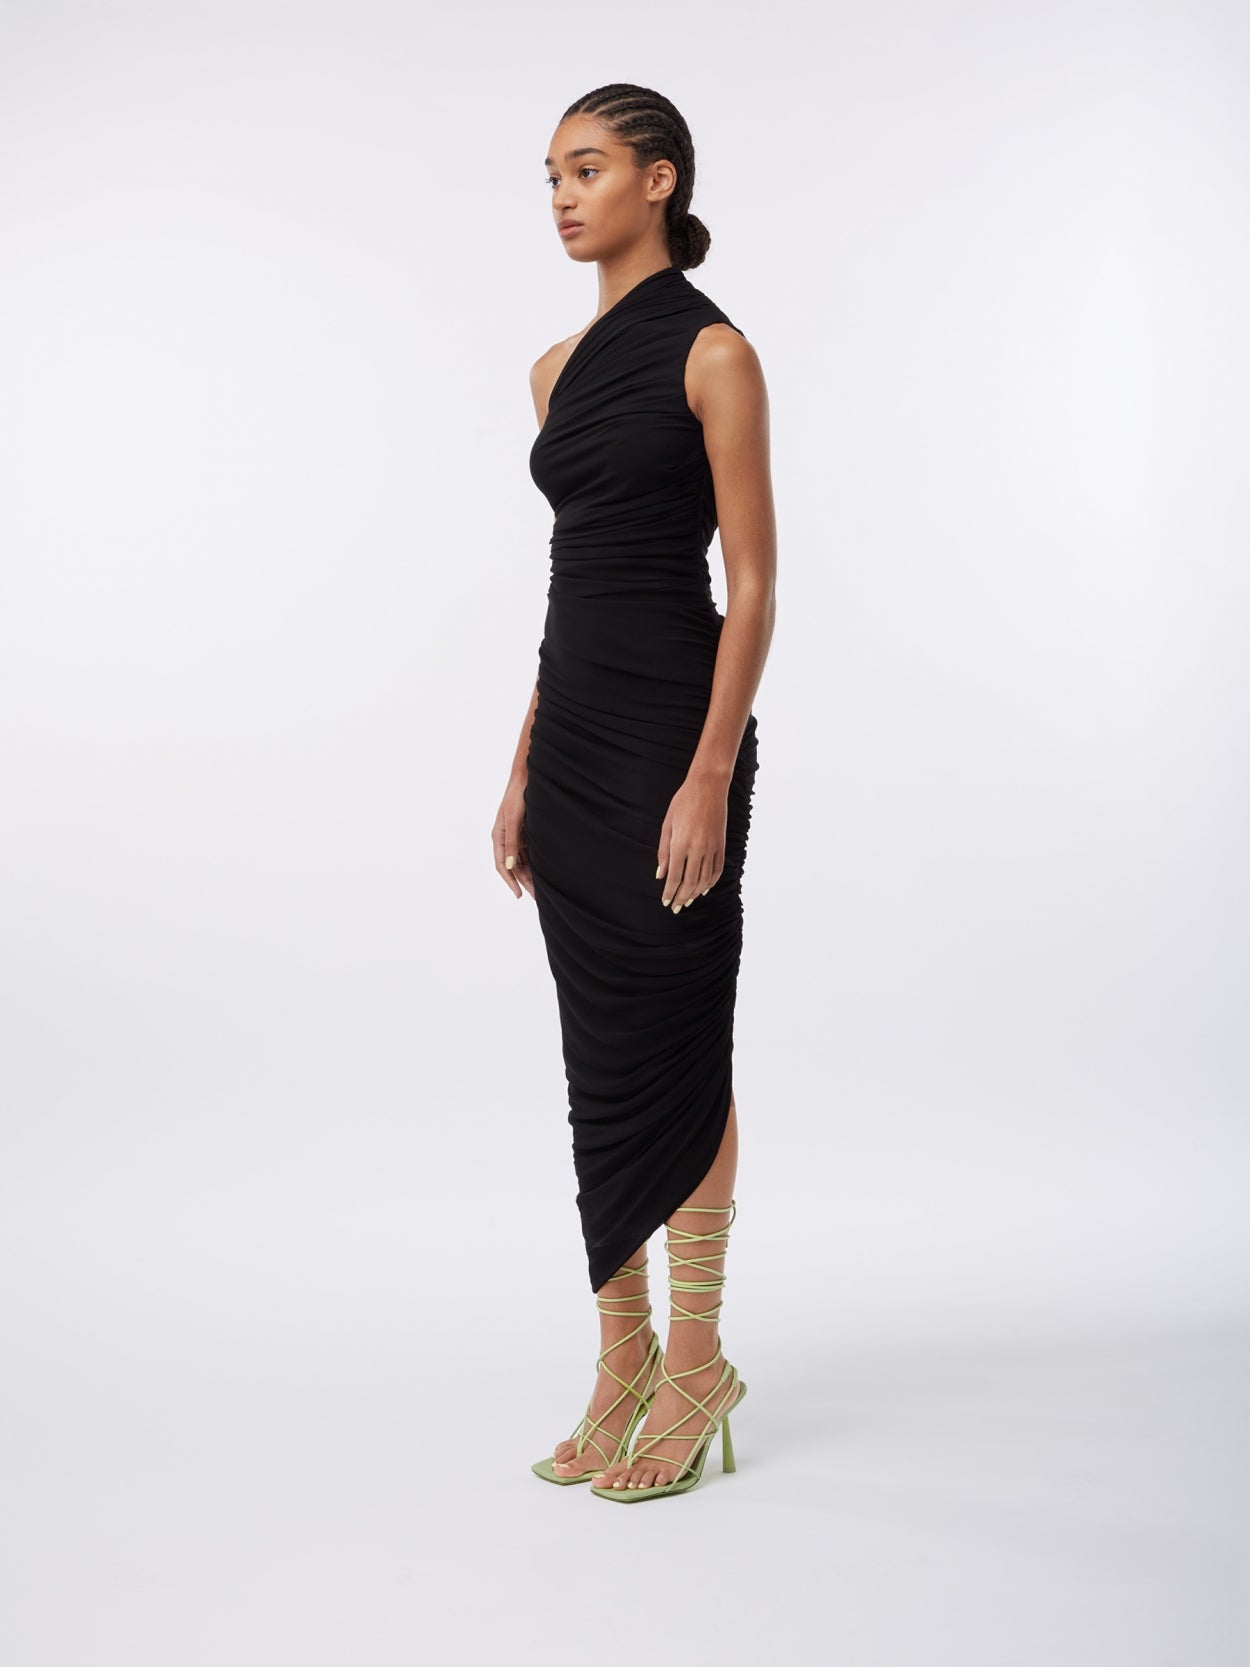 model wearing a one shoulder black draped dress